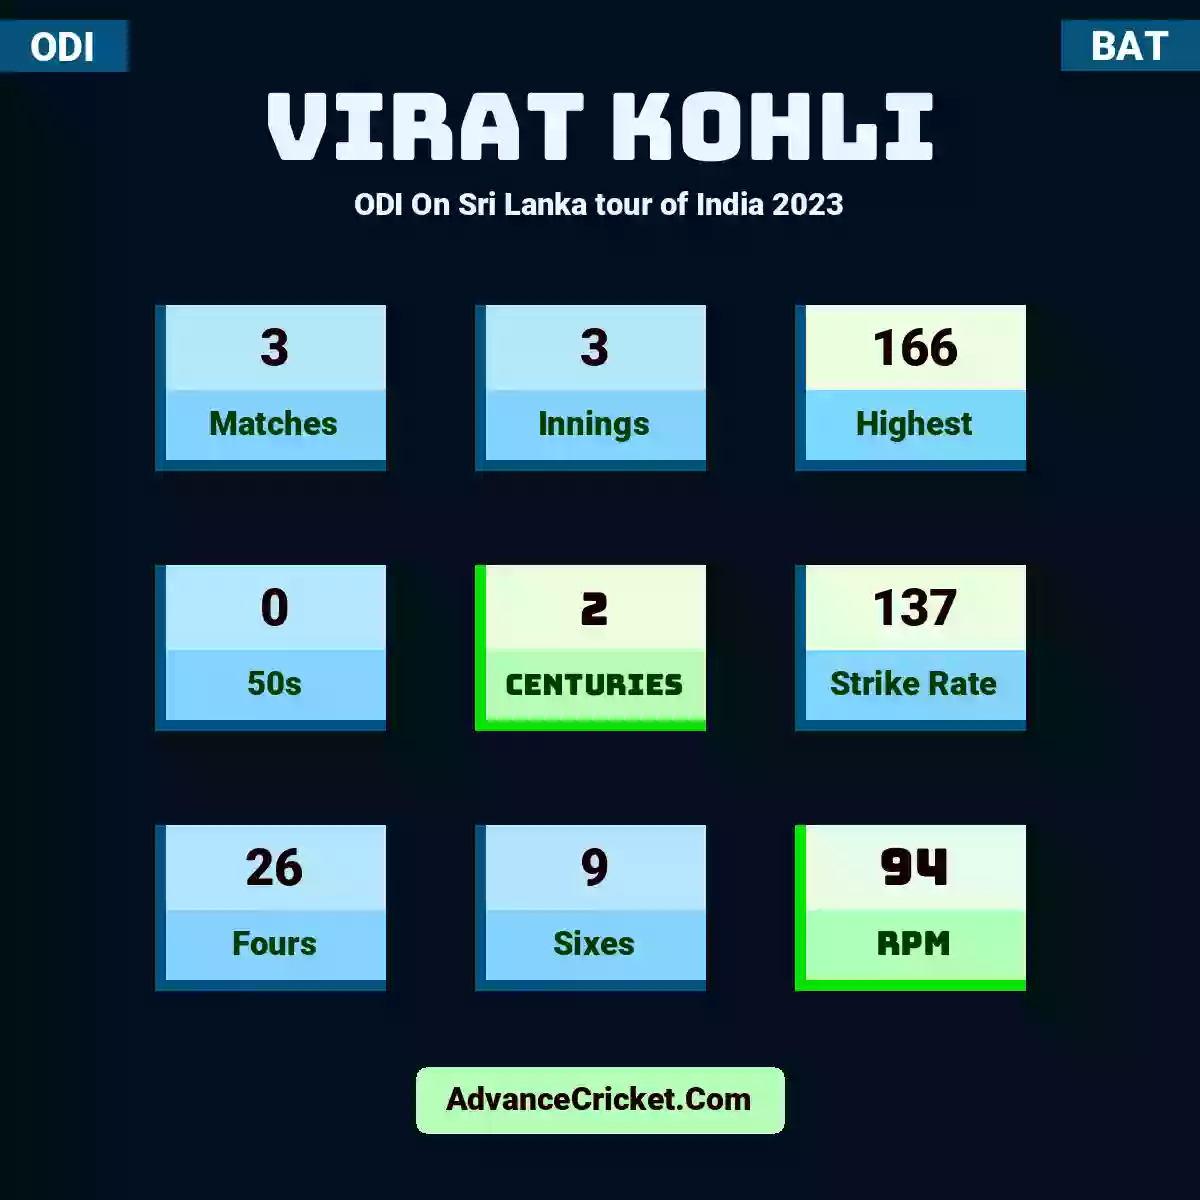 Virat Kohli ODI  On Sri Lanka tour of India 2023, Virat Kohli played 3 matches, scored 166 runs as highest, 0 half-centuries, and 2 centuries, with a strike rate of 137. V.Kohli hit 26 fours and 9 sixes, with an RPM of 94.